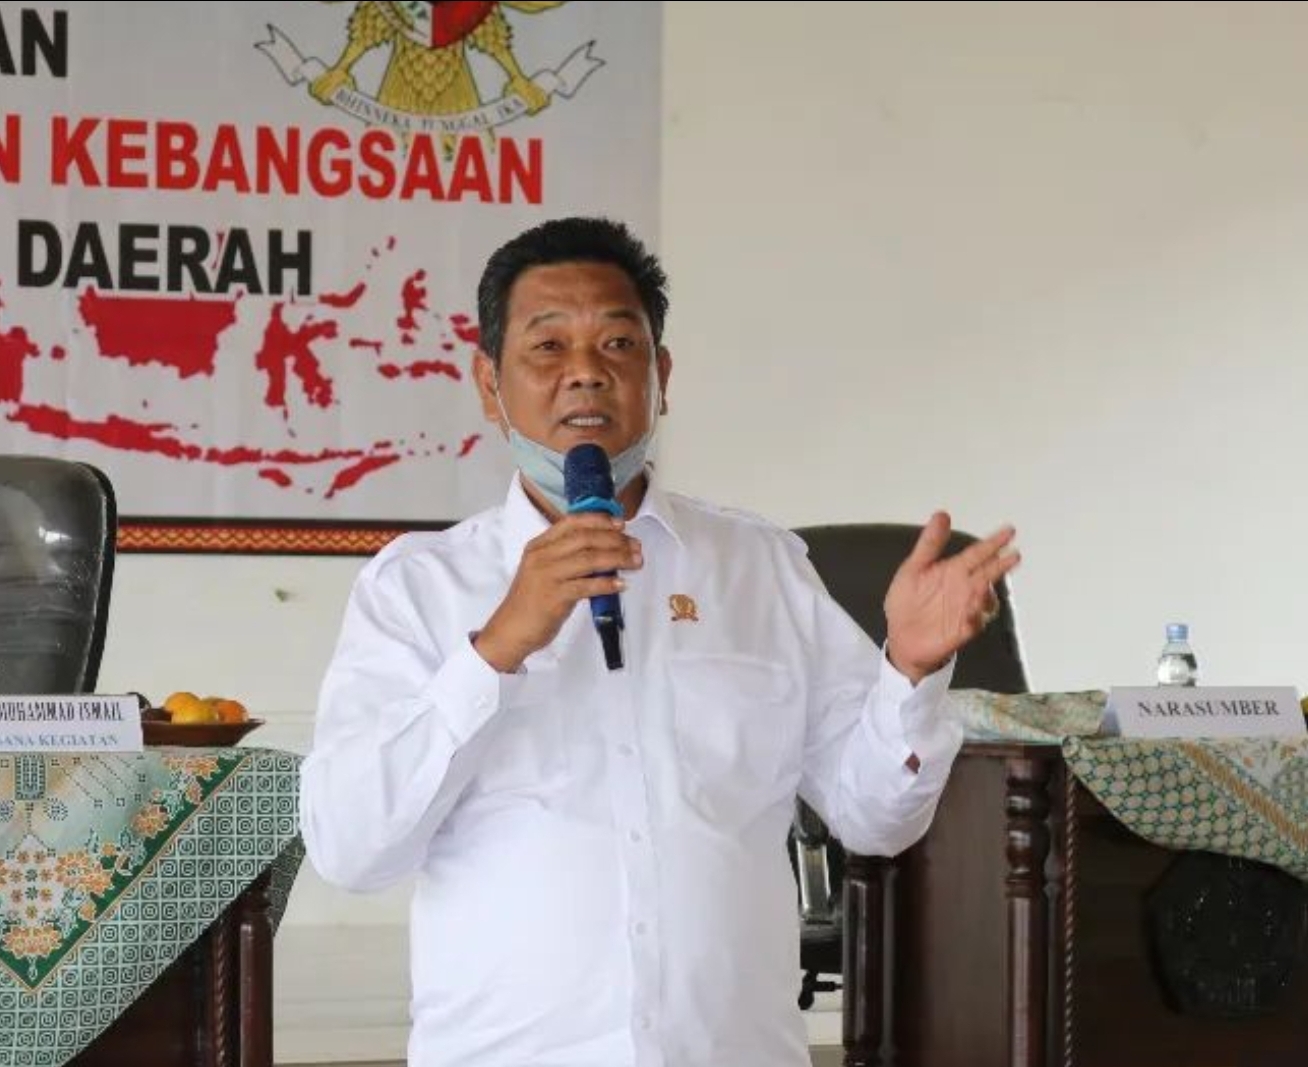 Terungkap, Ini Alasan Utama Pemberhentian Tetap Raden Muhammad Ismail dari Demokrat 